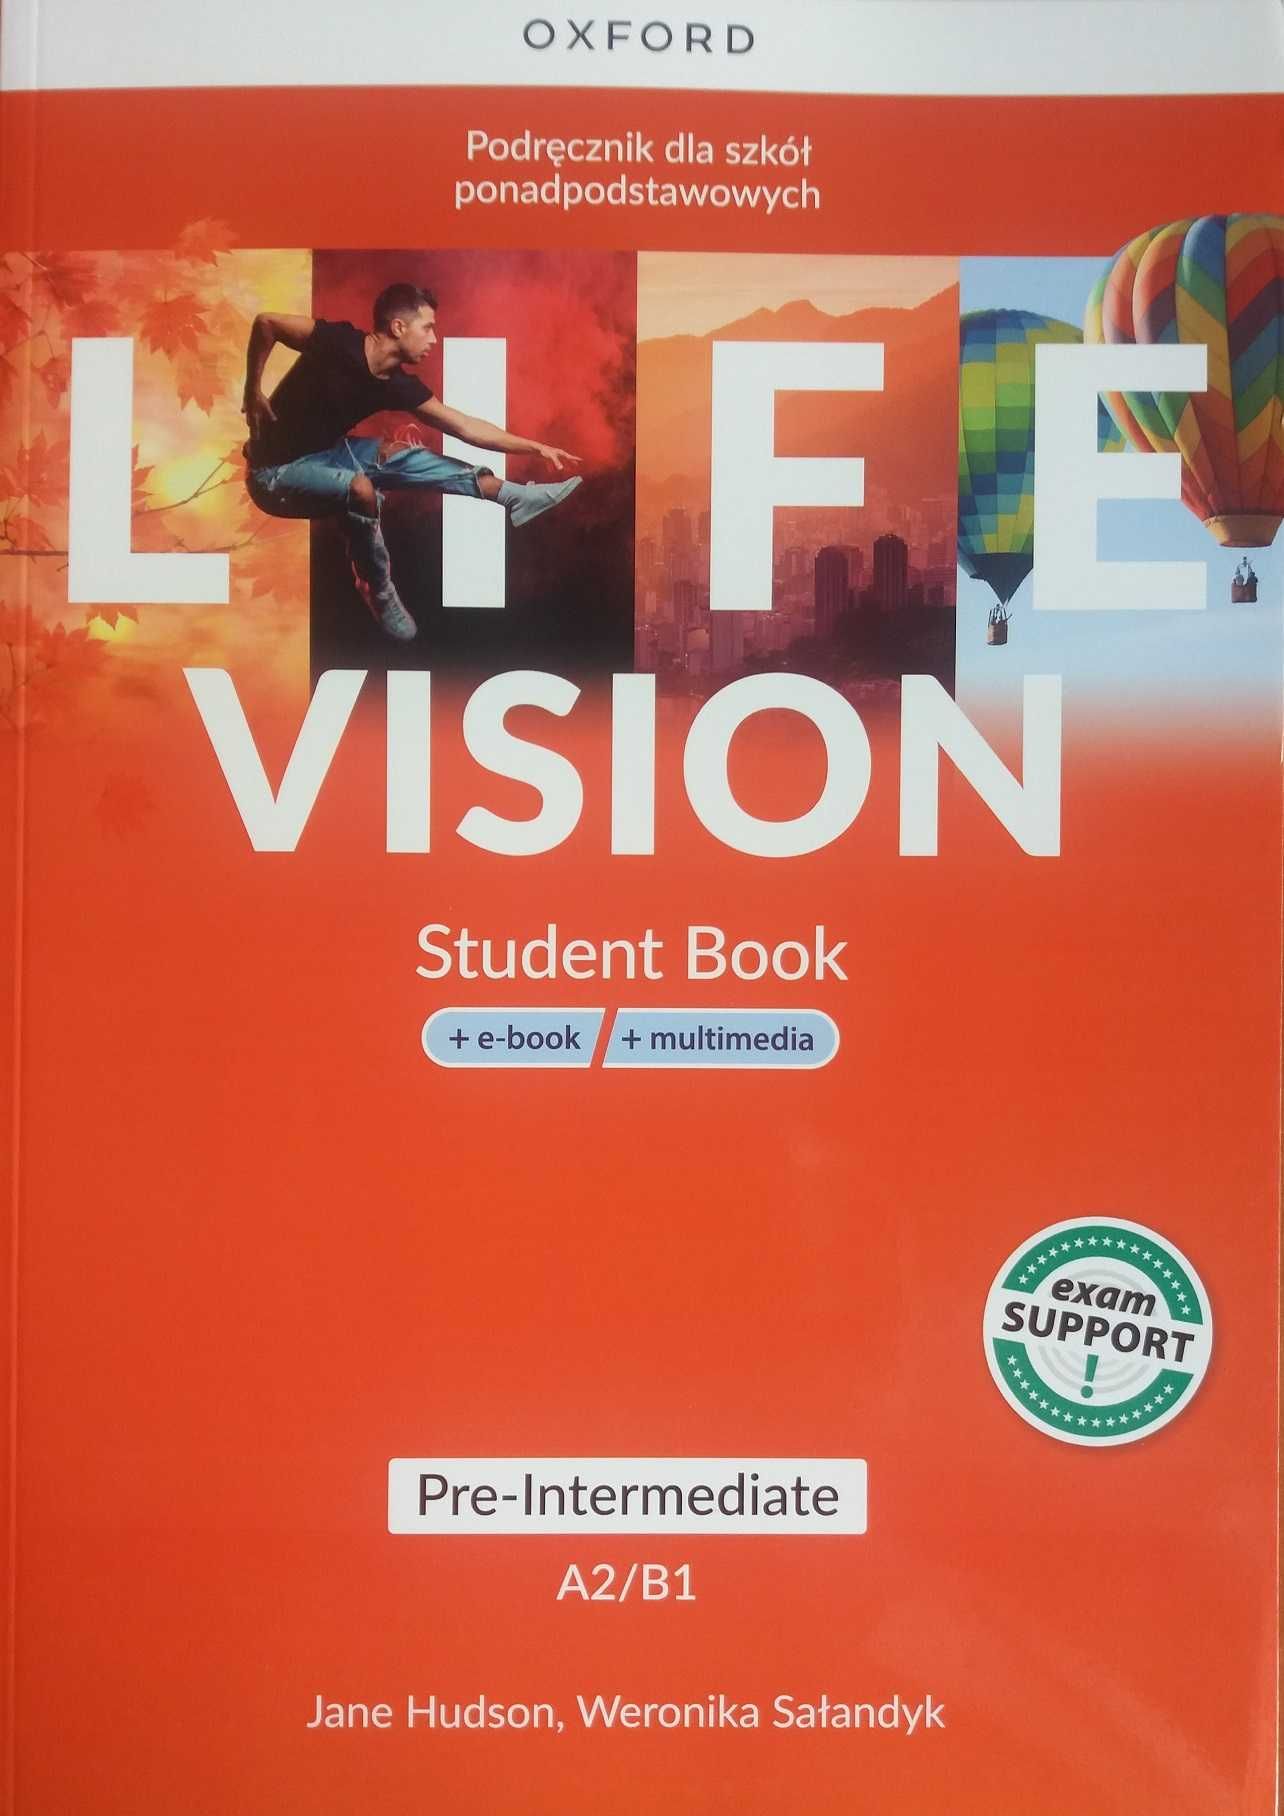 Life Vision Student's Book Pre-Intermediate A2/B1 Oxford